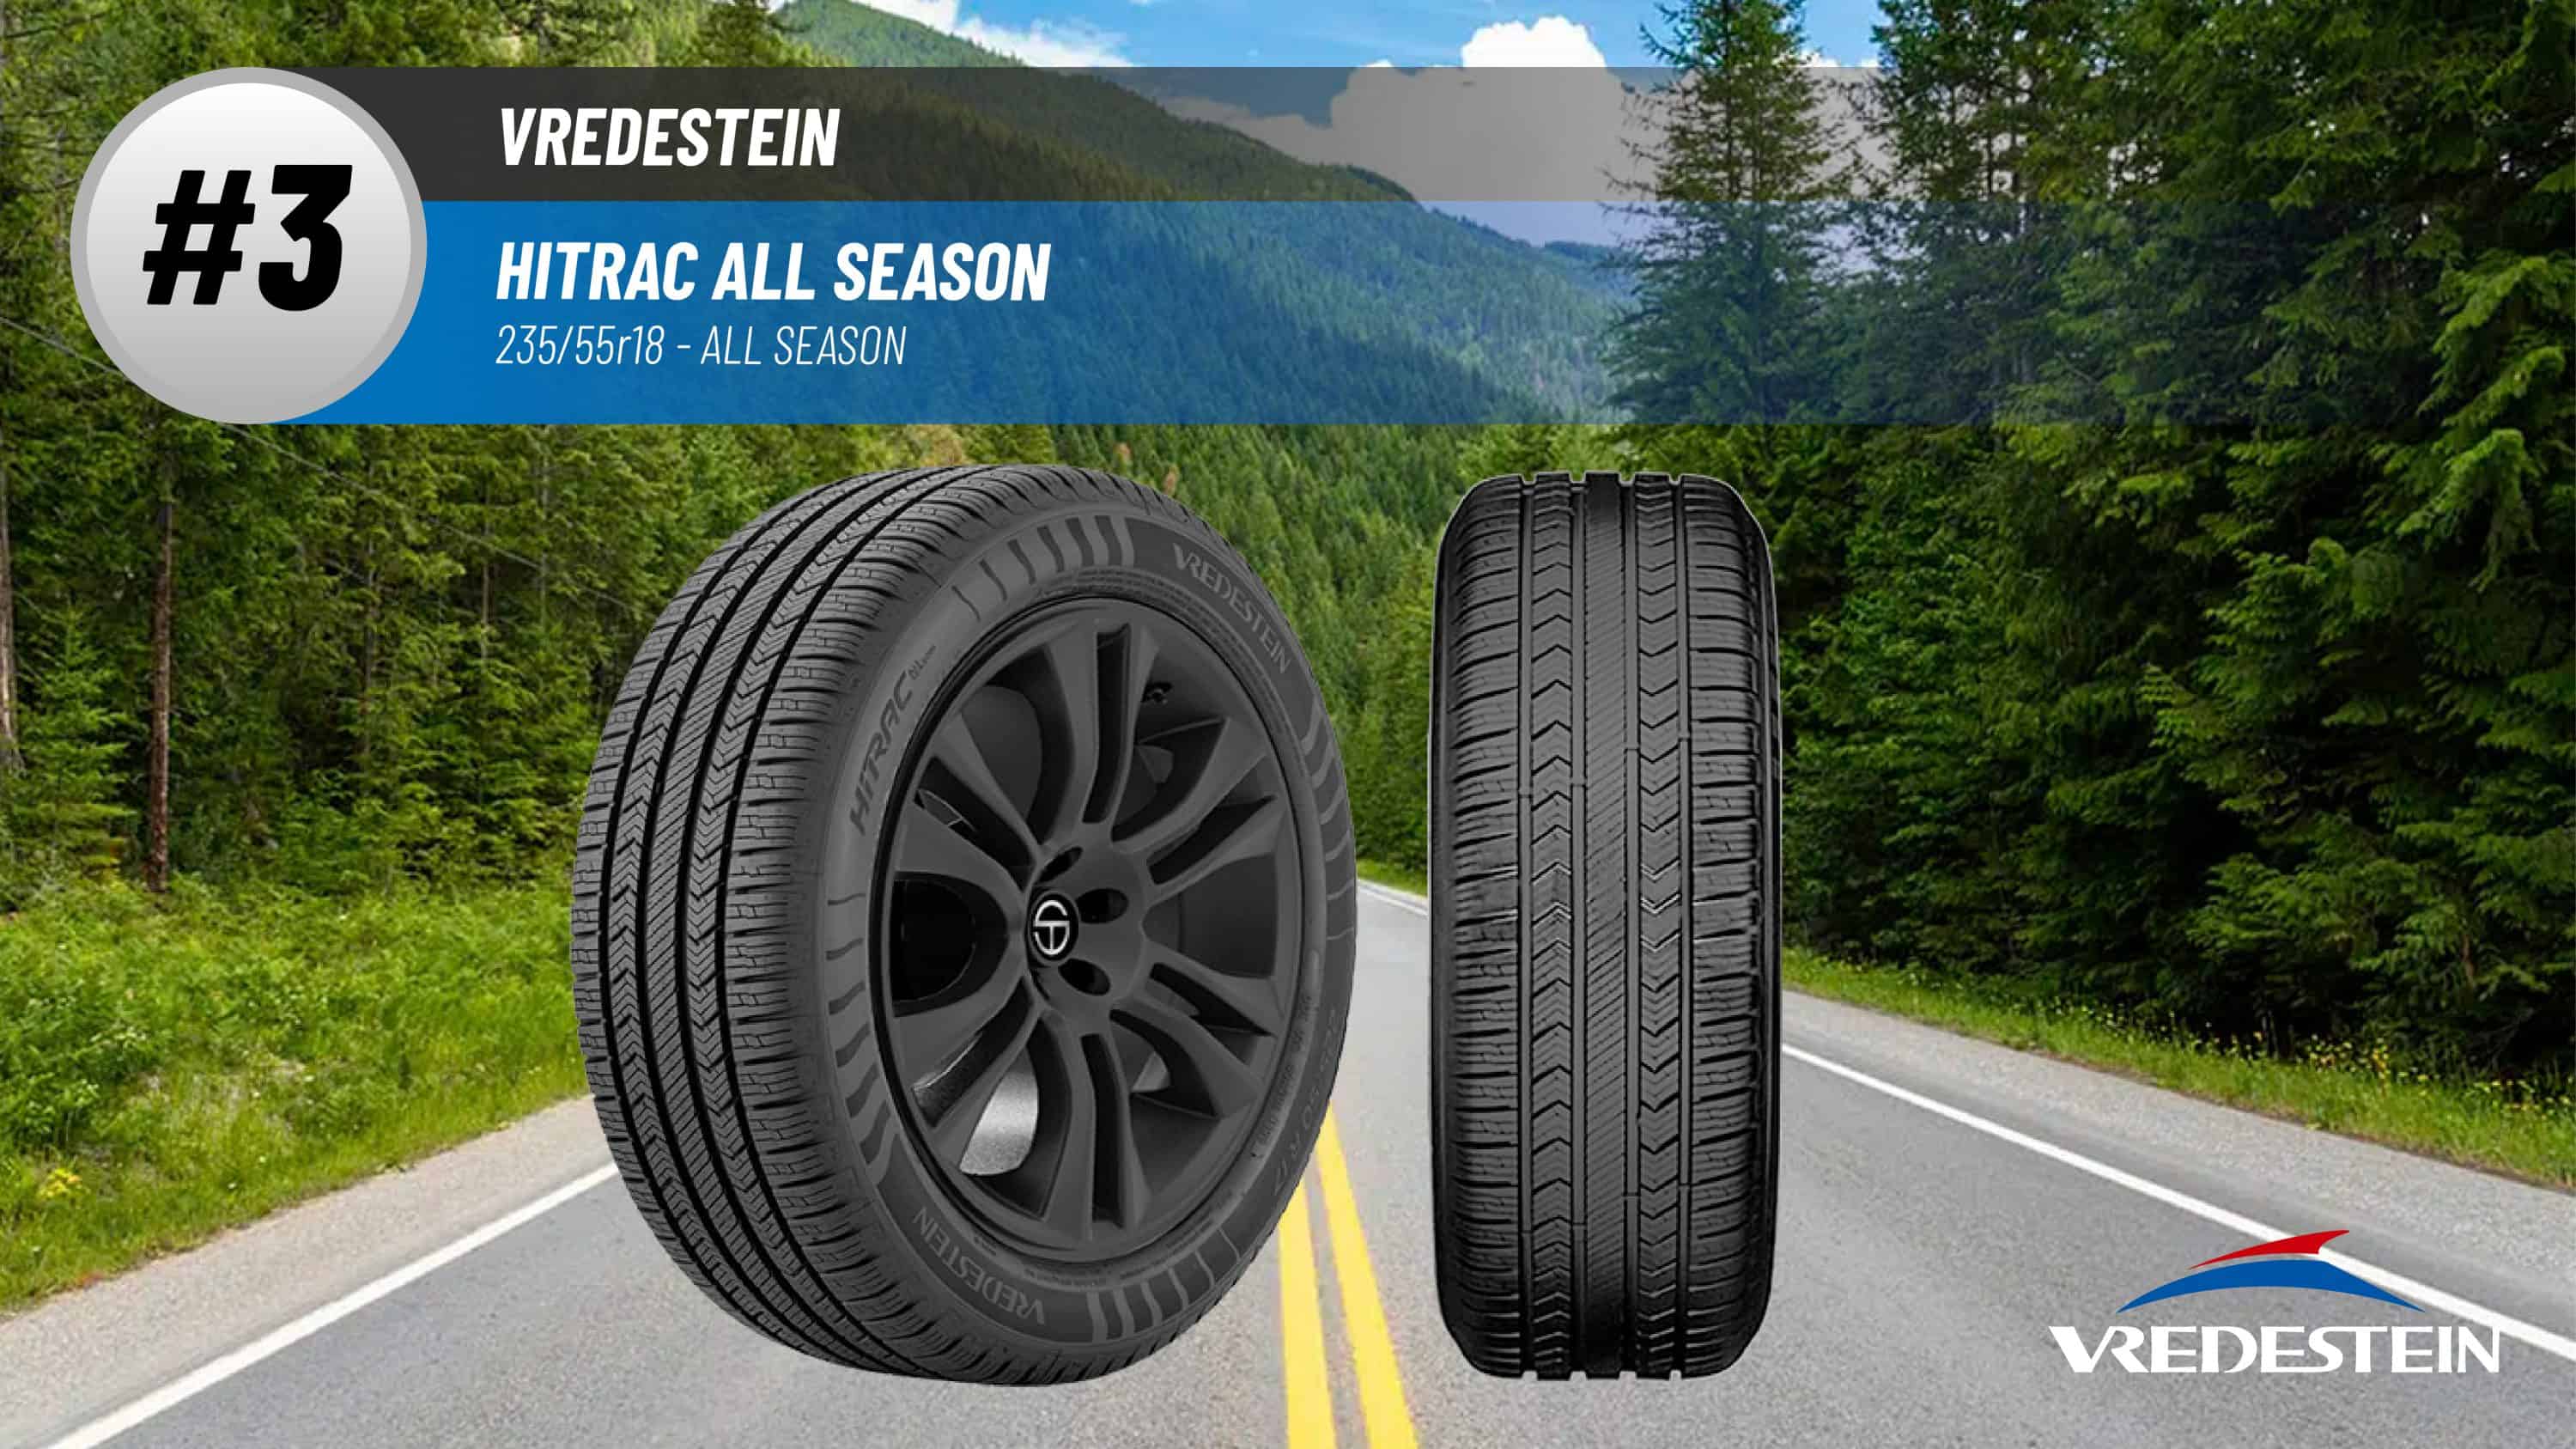 Top #3 All Season Tires: Vredestein Hitrac All Season – 235/55r18